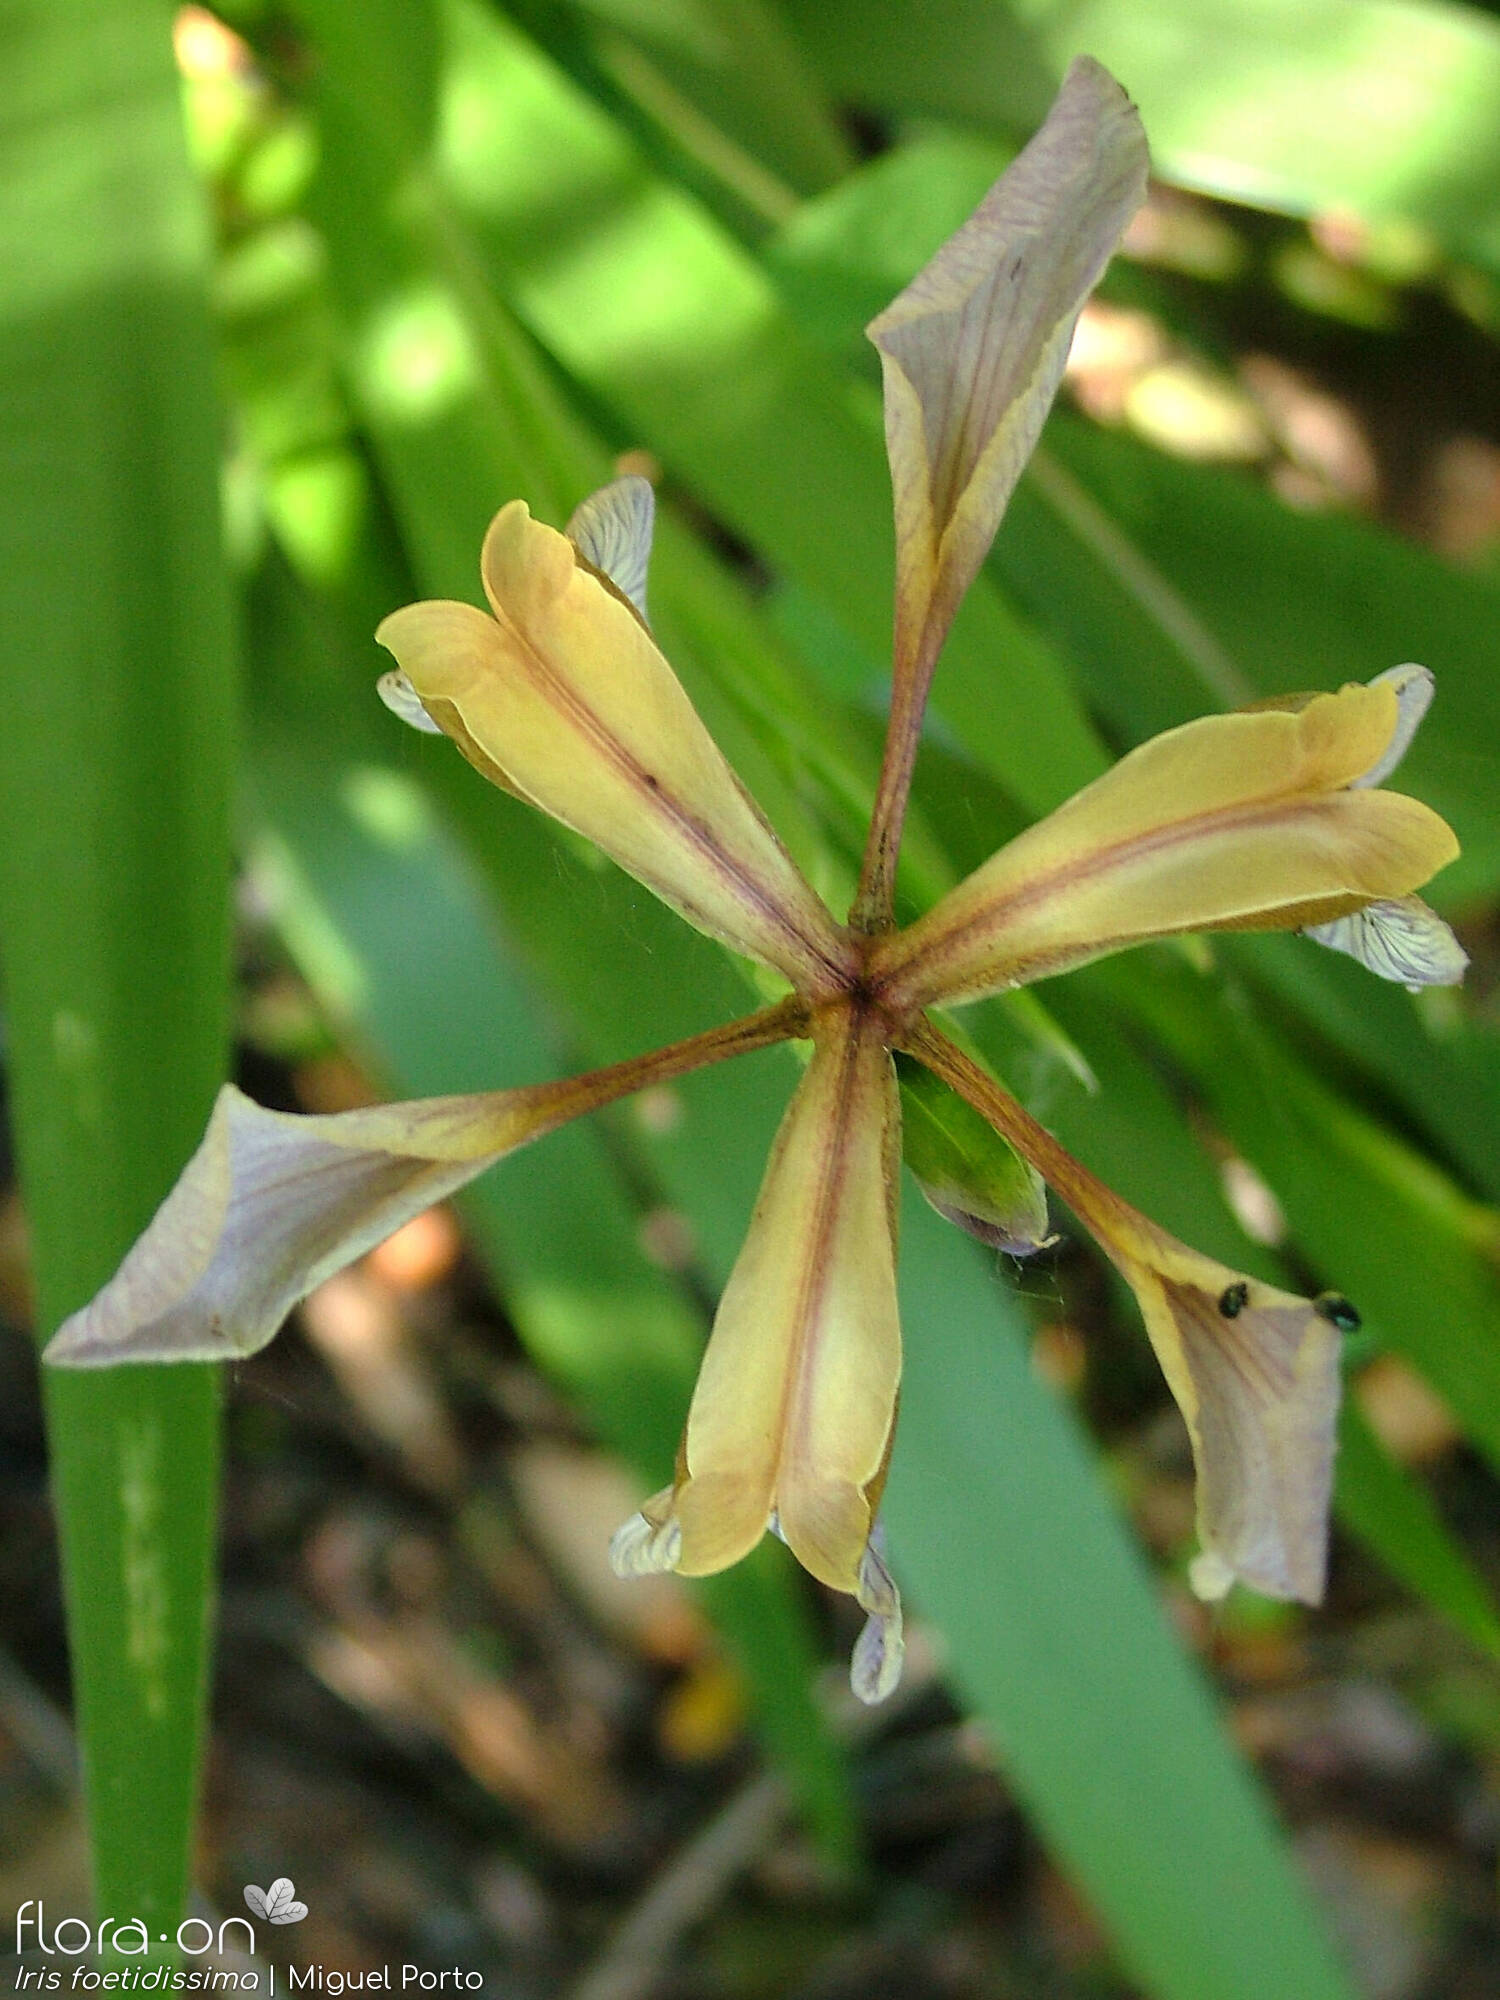 Iris foetidissima - Flor (close-up) | Miguel Porto; CC BY-NC 4.0